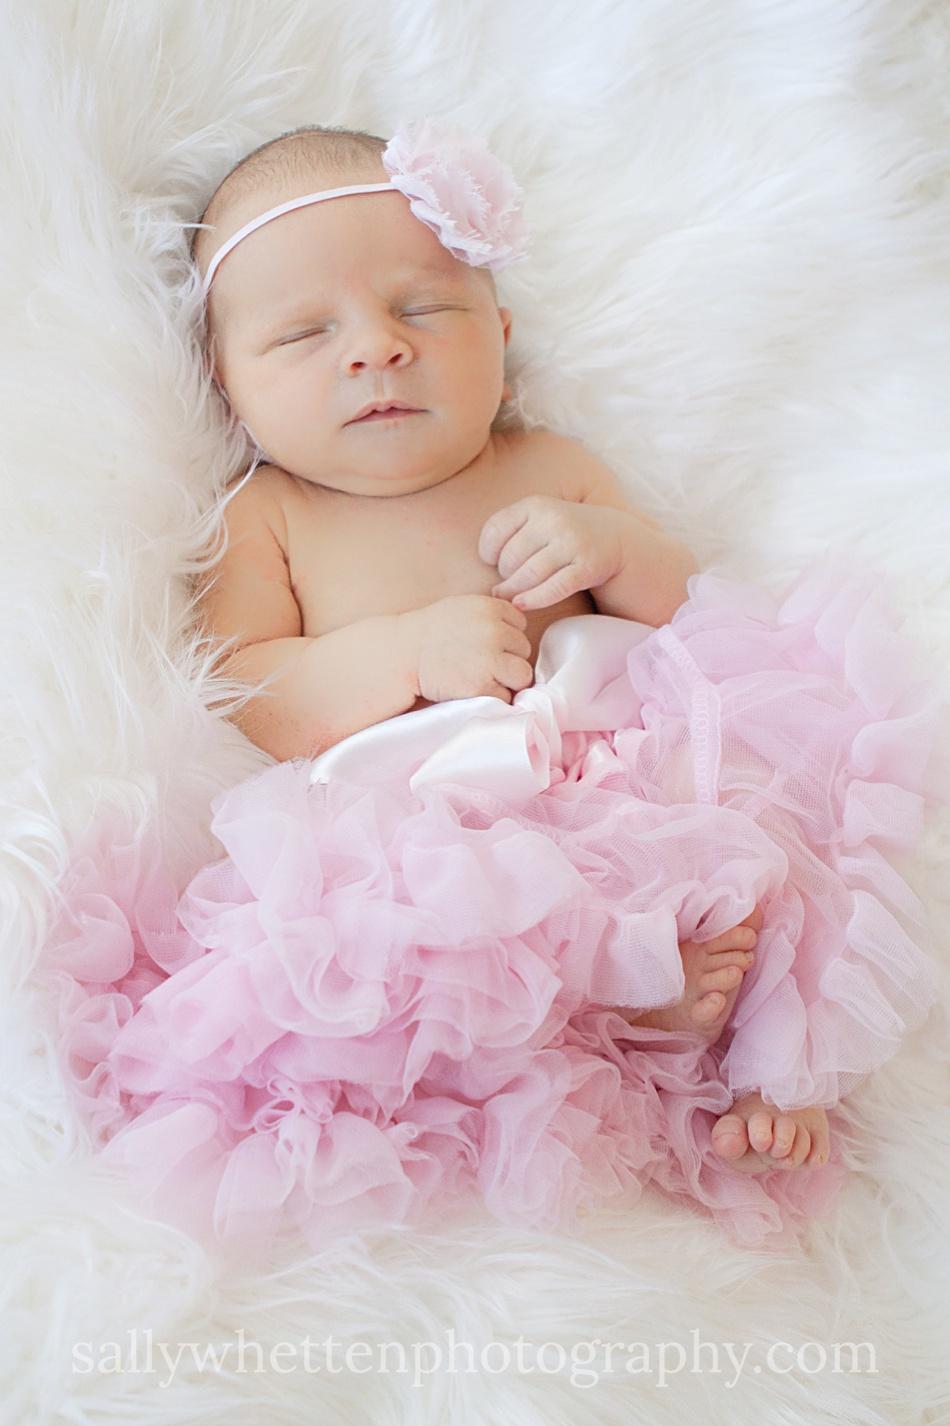 Soft, beautiful baby girl photos